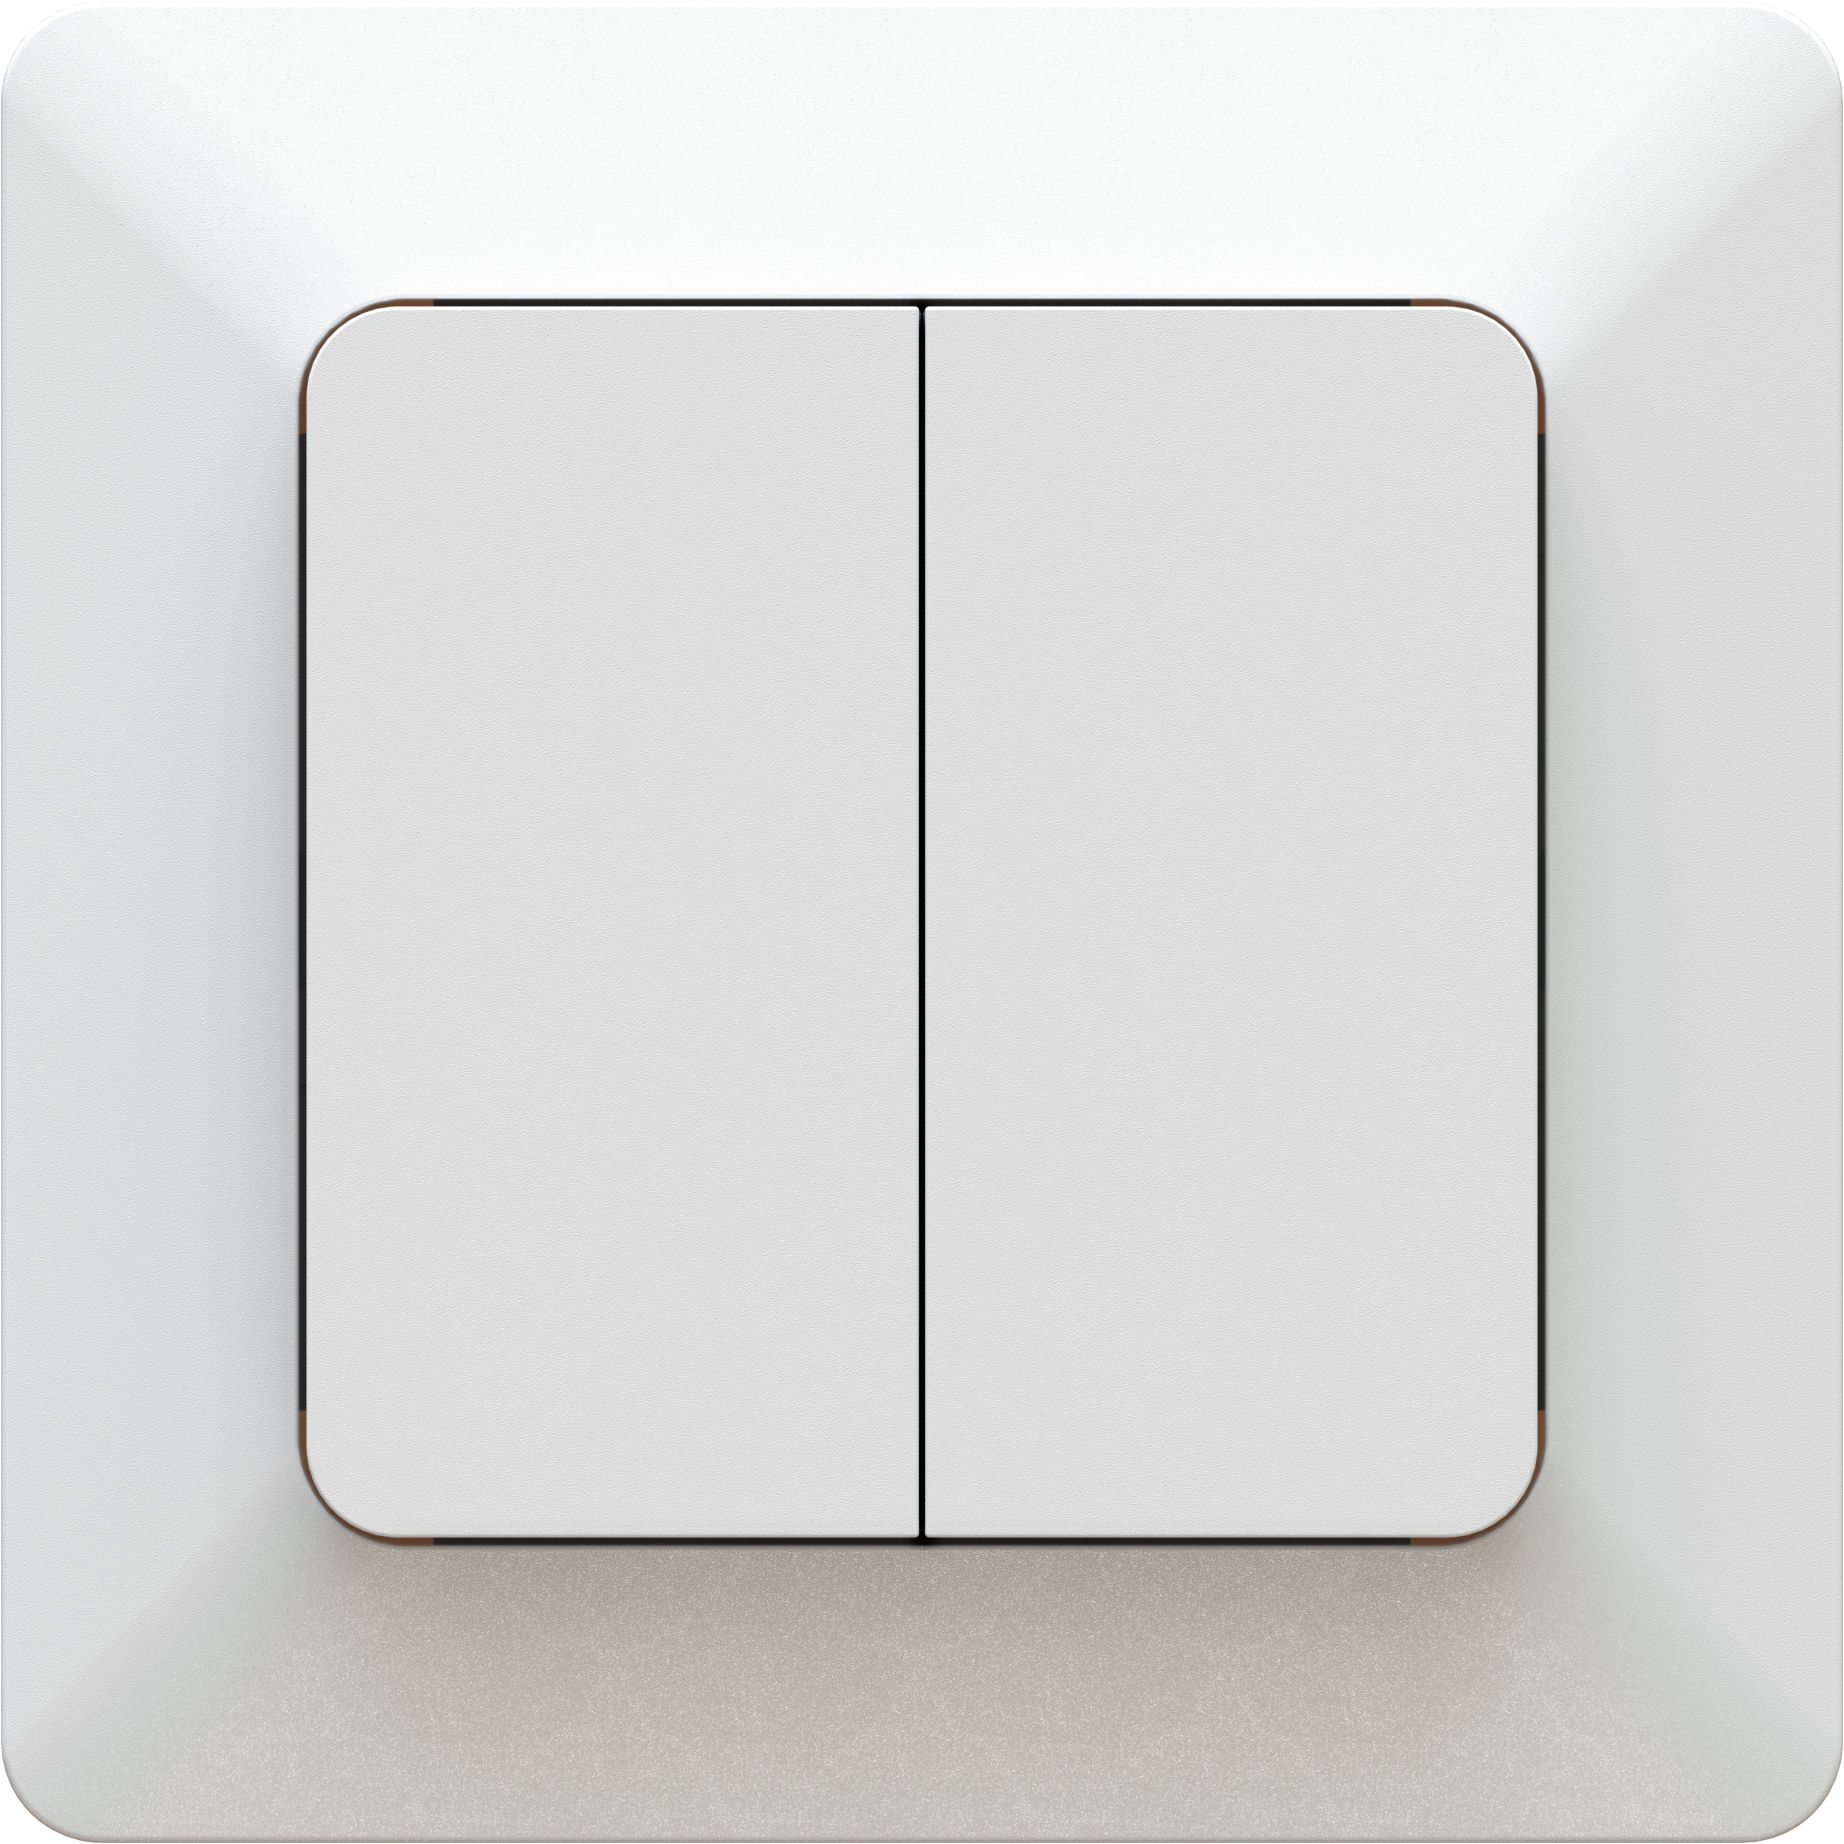 Flush-type wall impuls switch schema 1 white